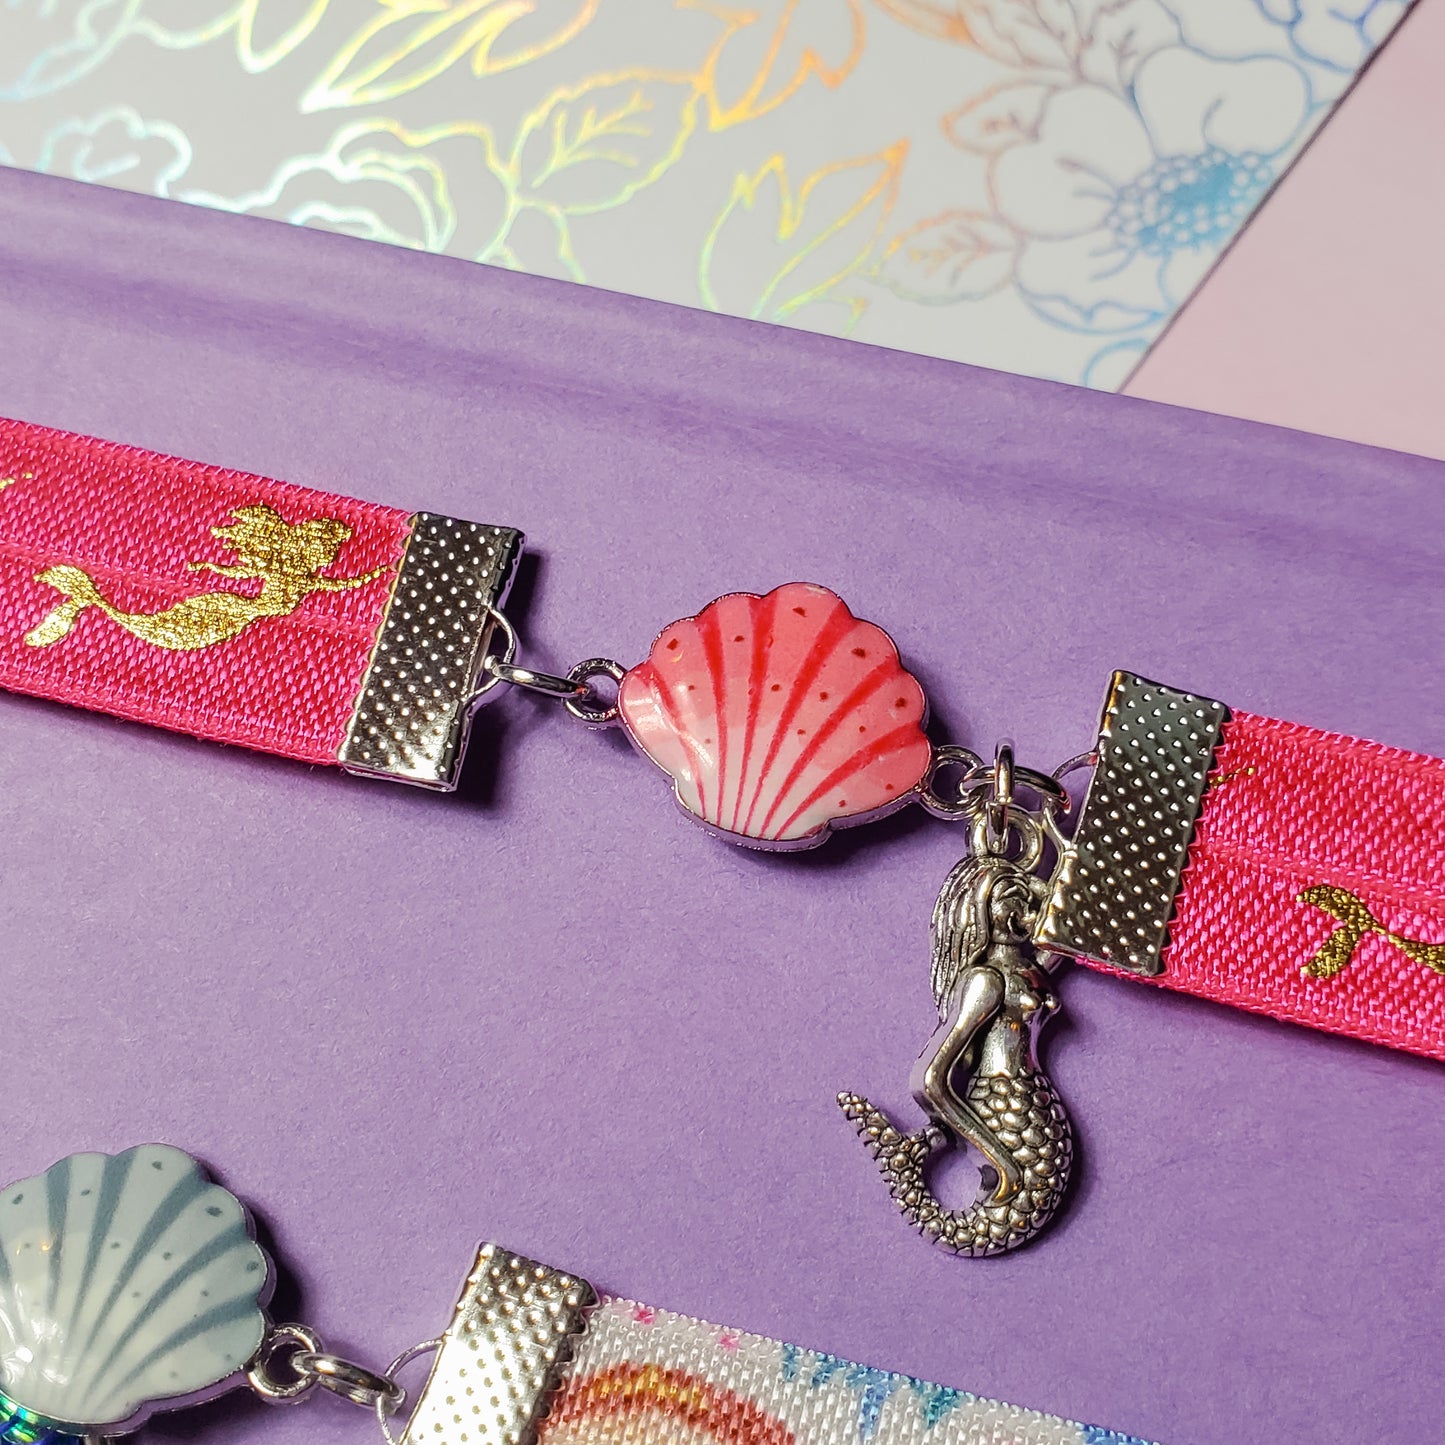 Mermaid and Seashell Inspired Elastic Bookmarks